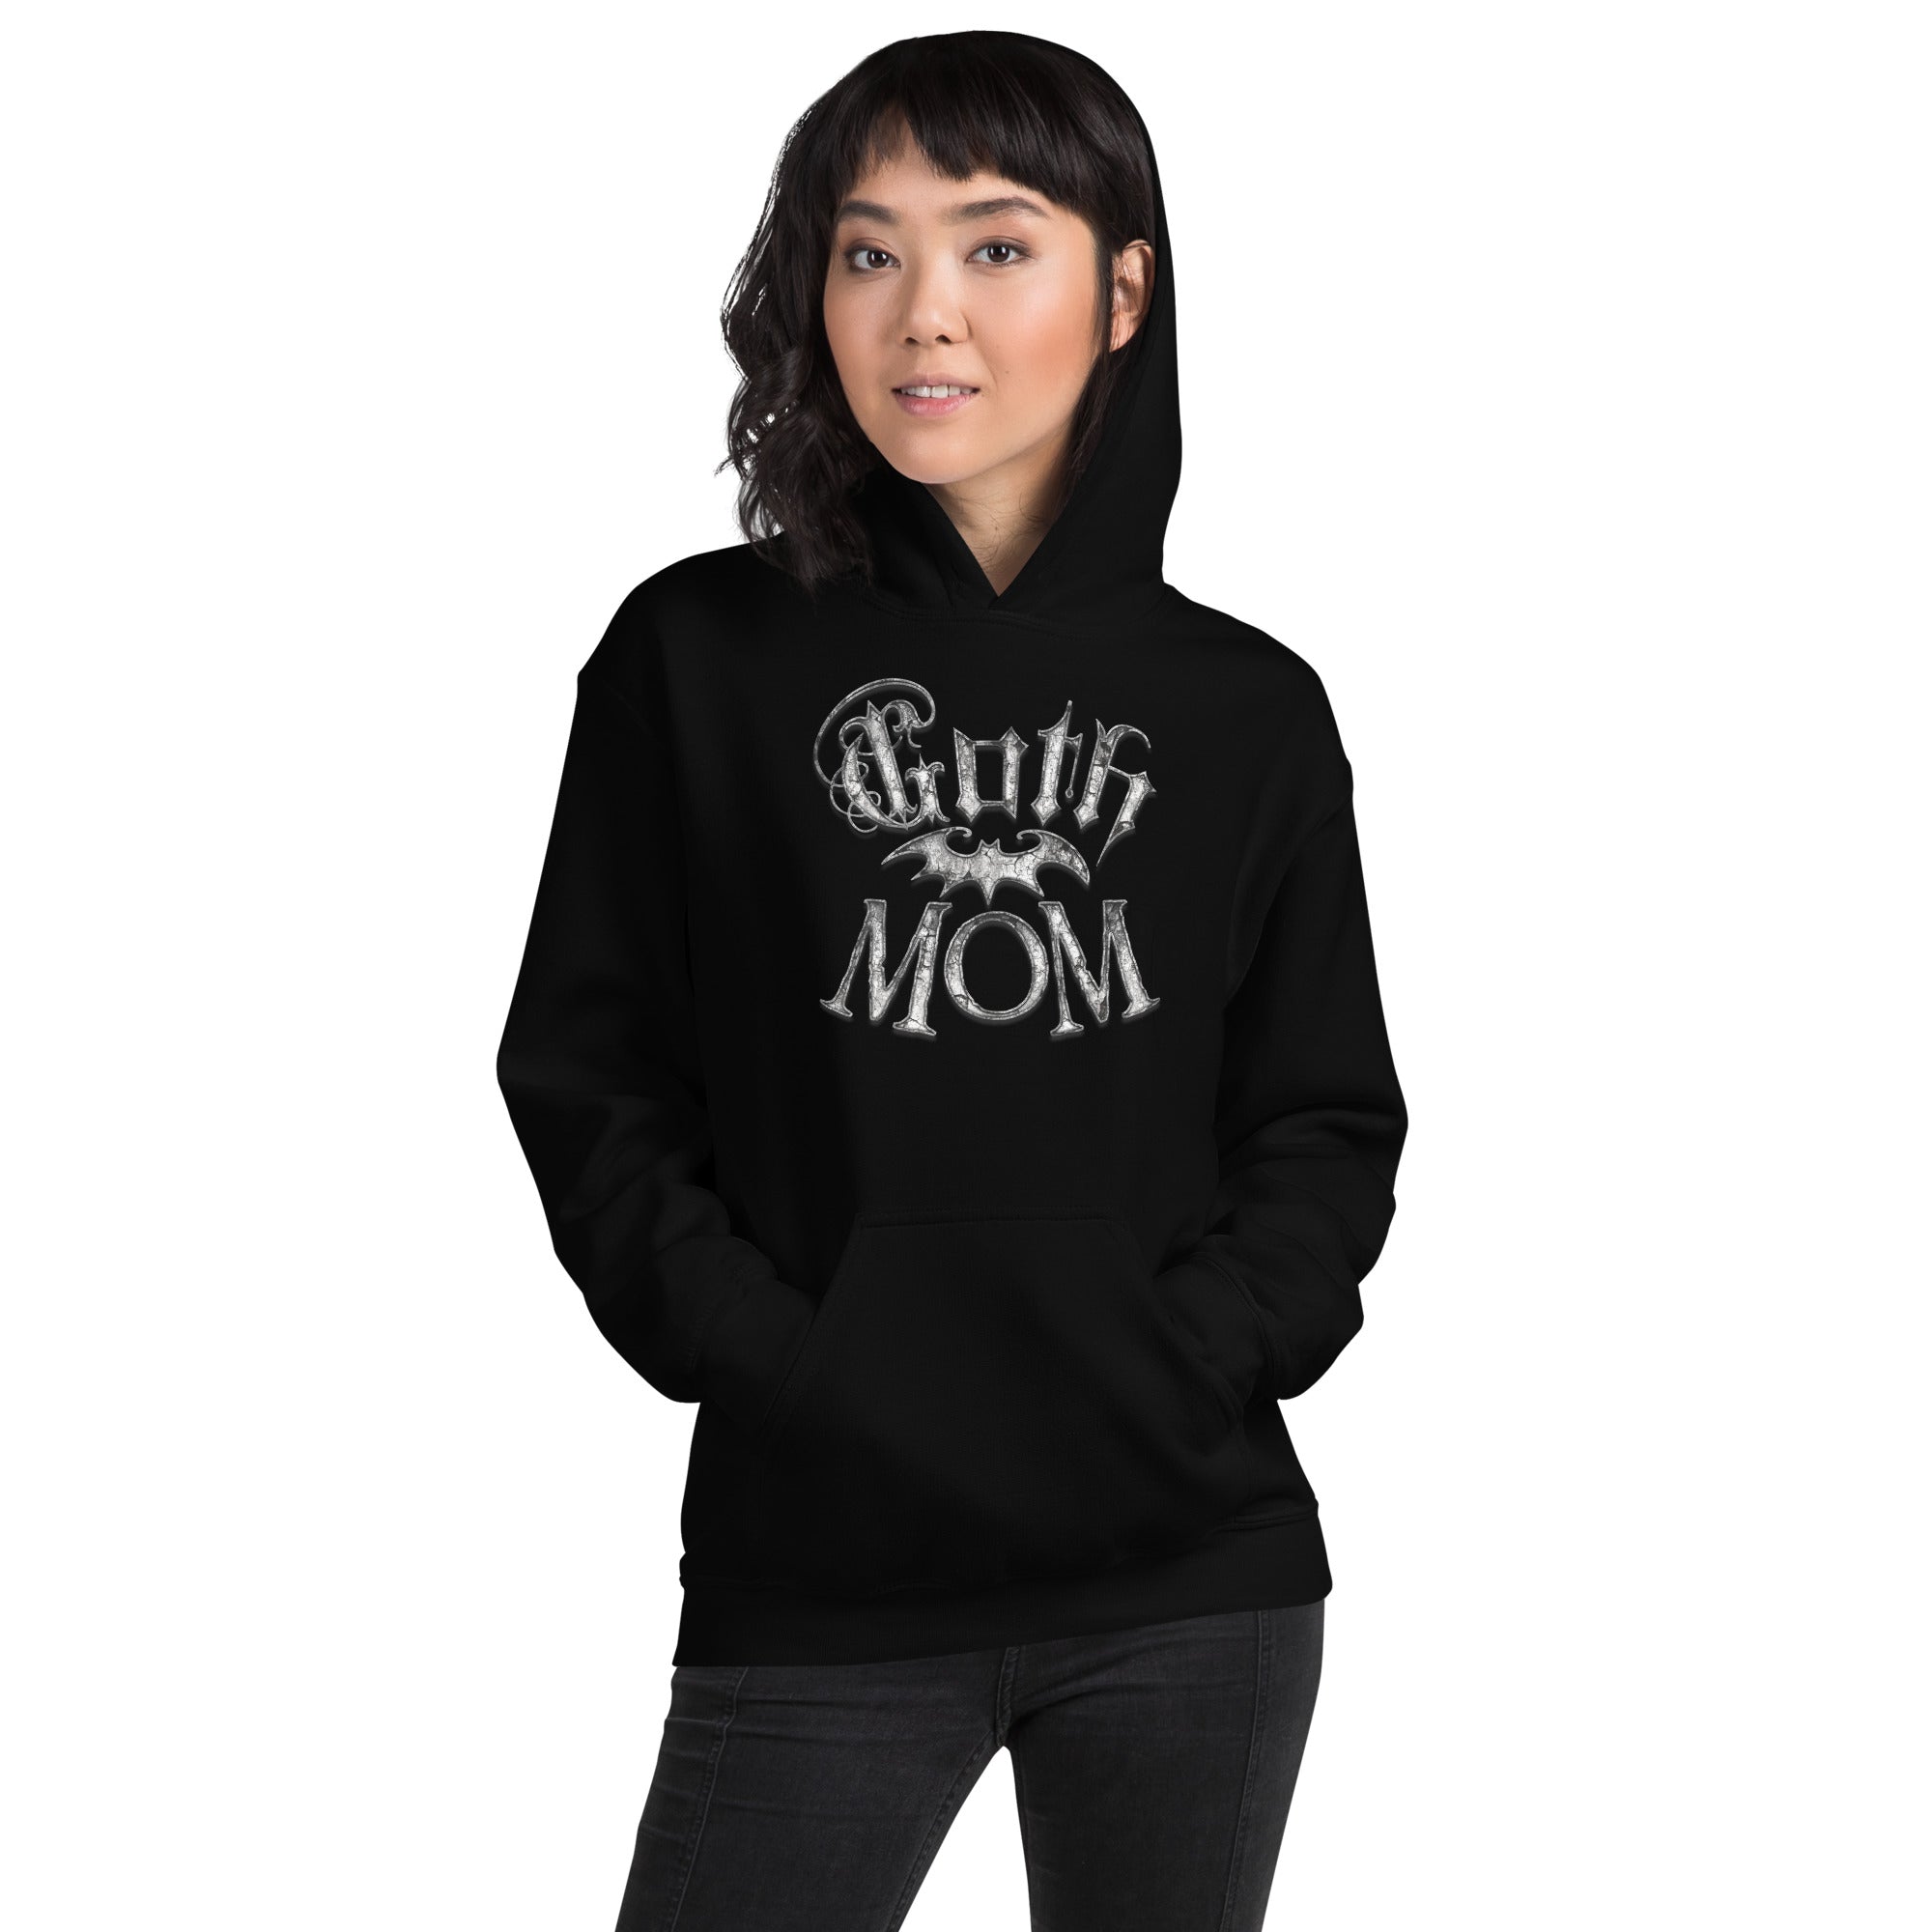 White Goth Mom with Bat Mother's Day Unisex Hoodie Sweatshirt